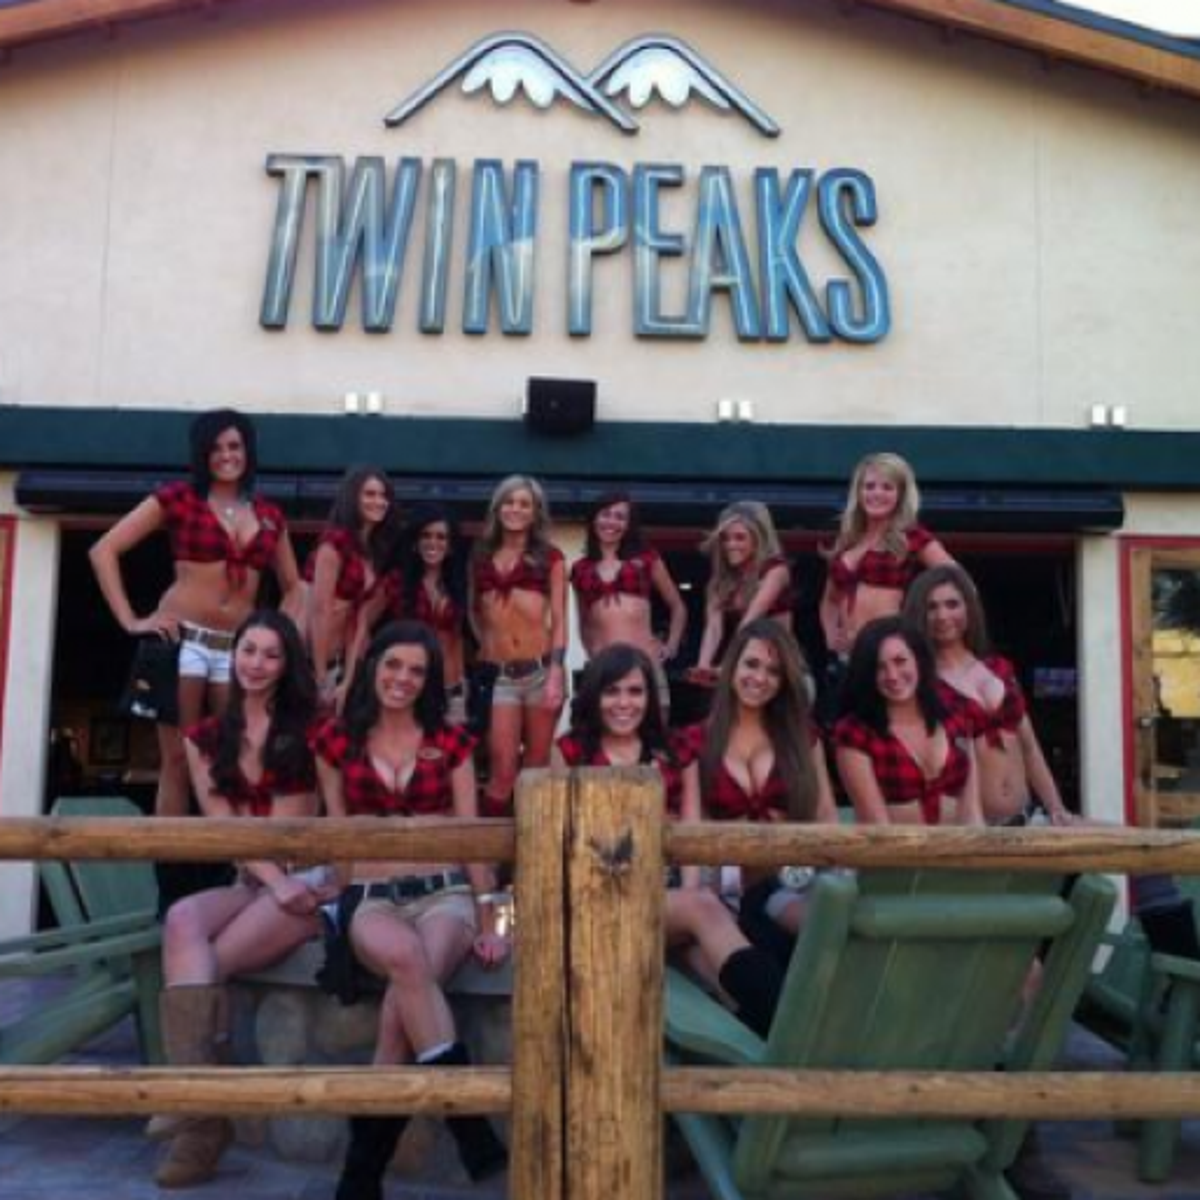 Twin peaks restaurant girls